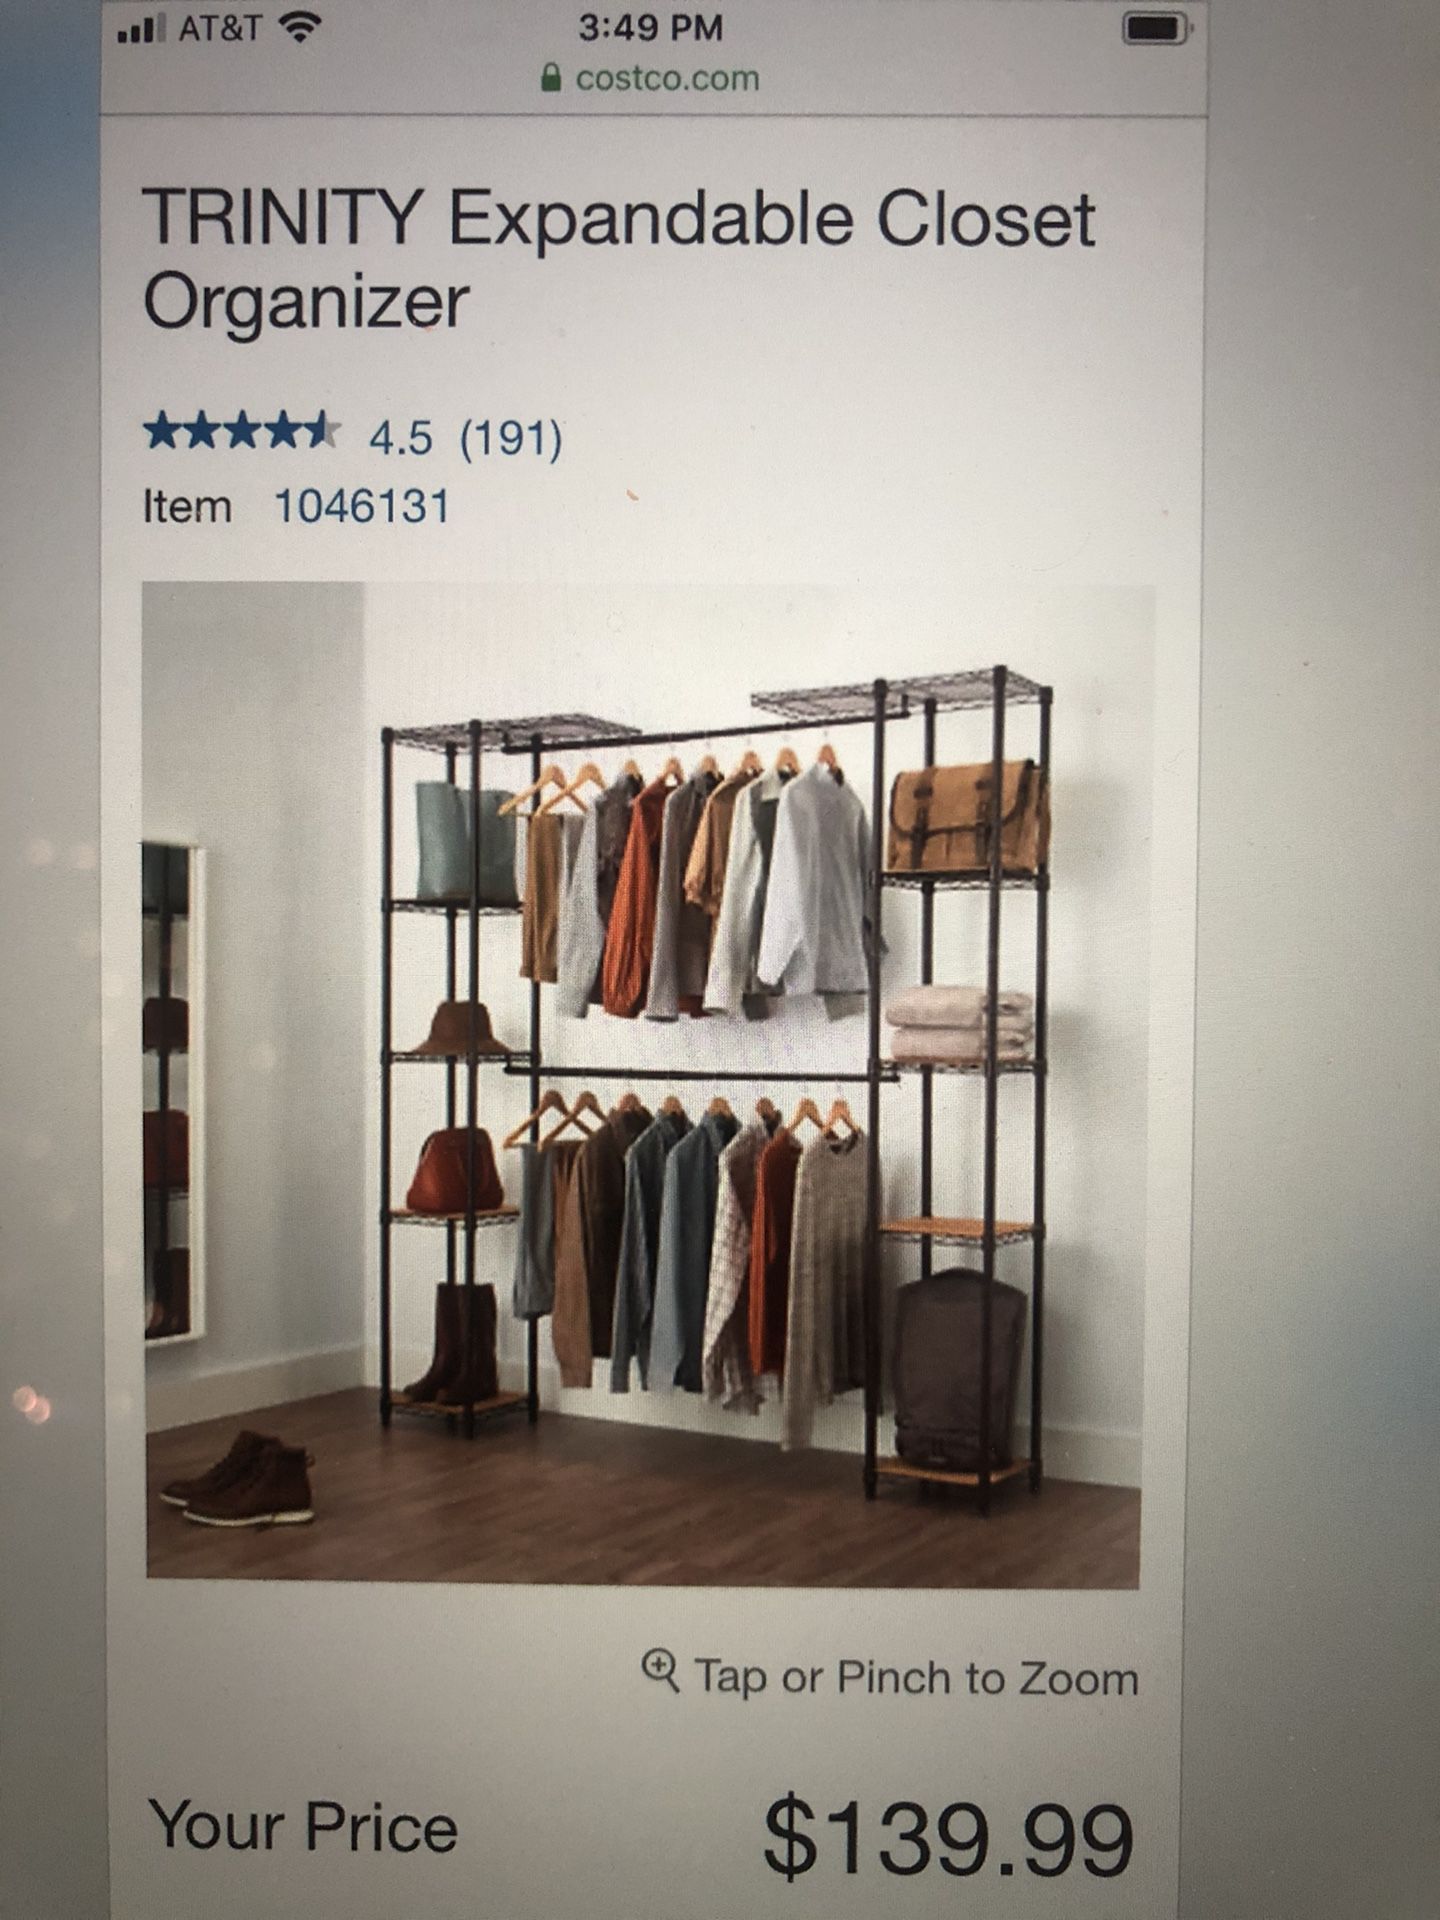 Expandable closet organizer (Costco)